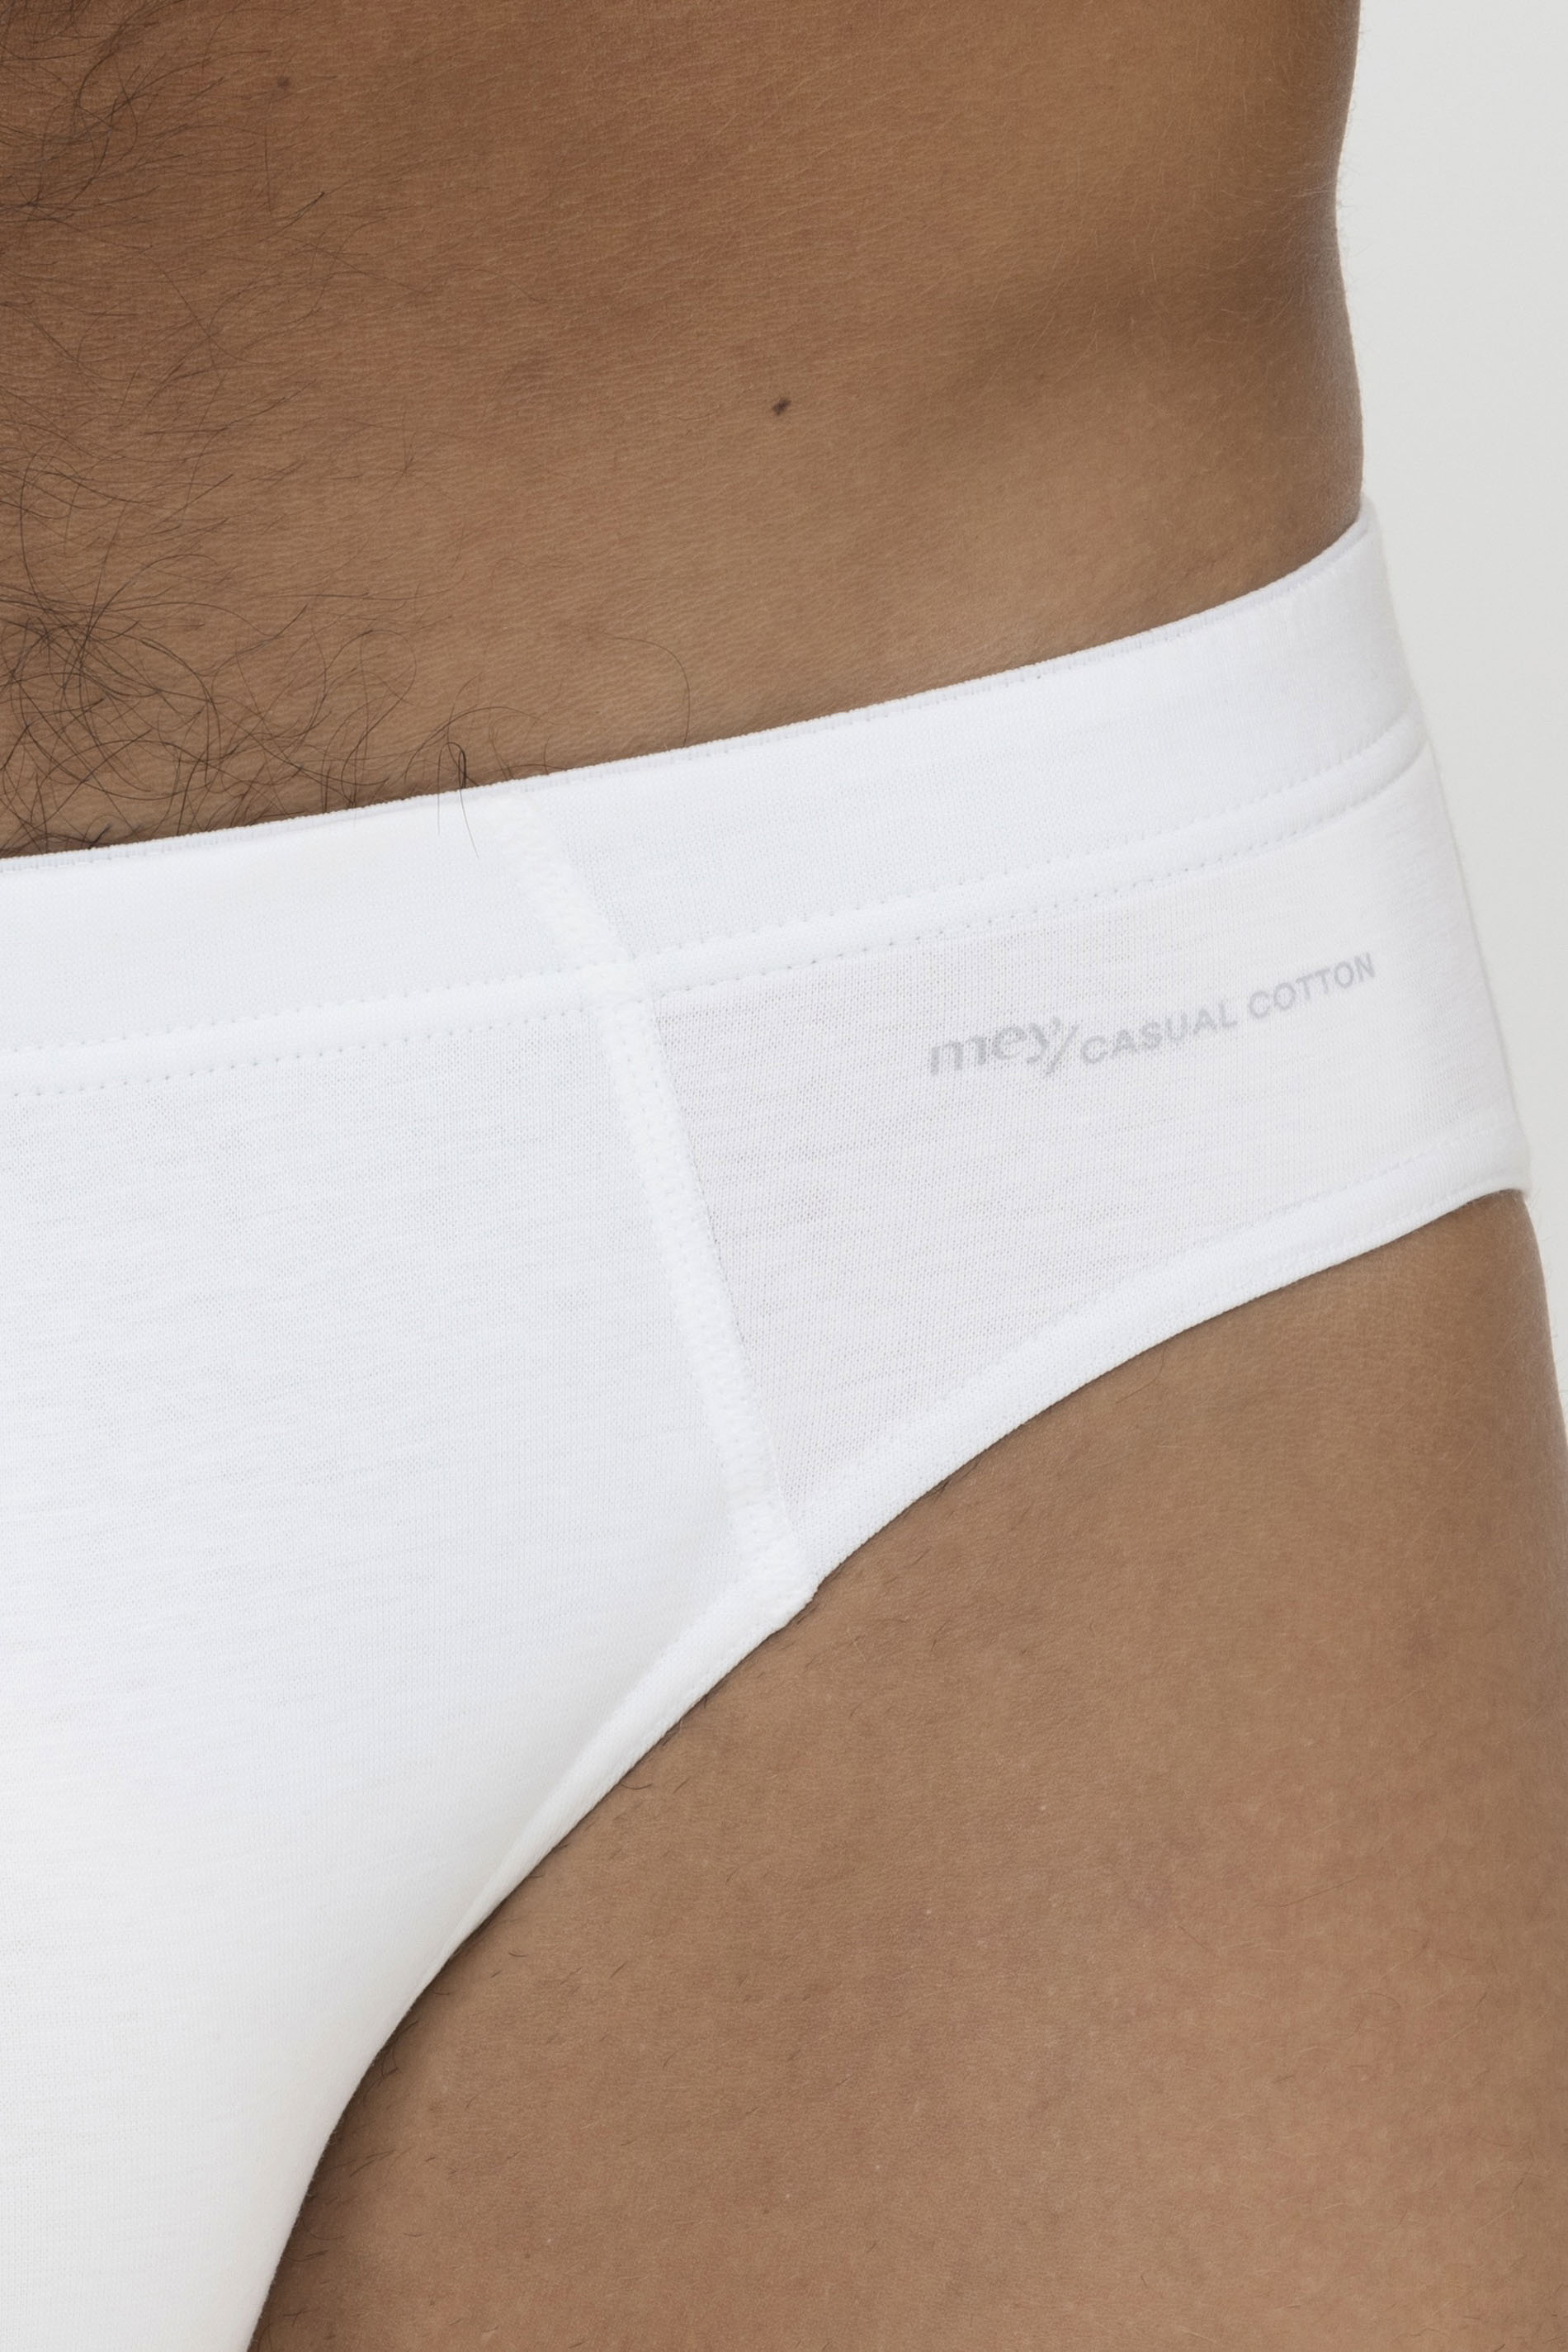 Jazz pants White Serie Casual Cotton Detail View 01 | mey®